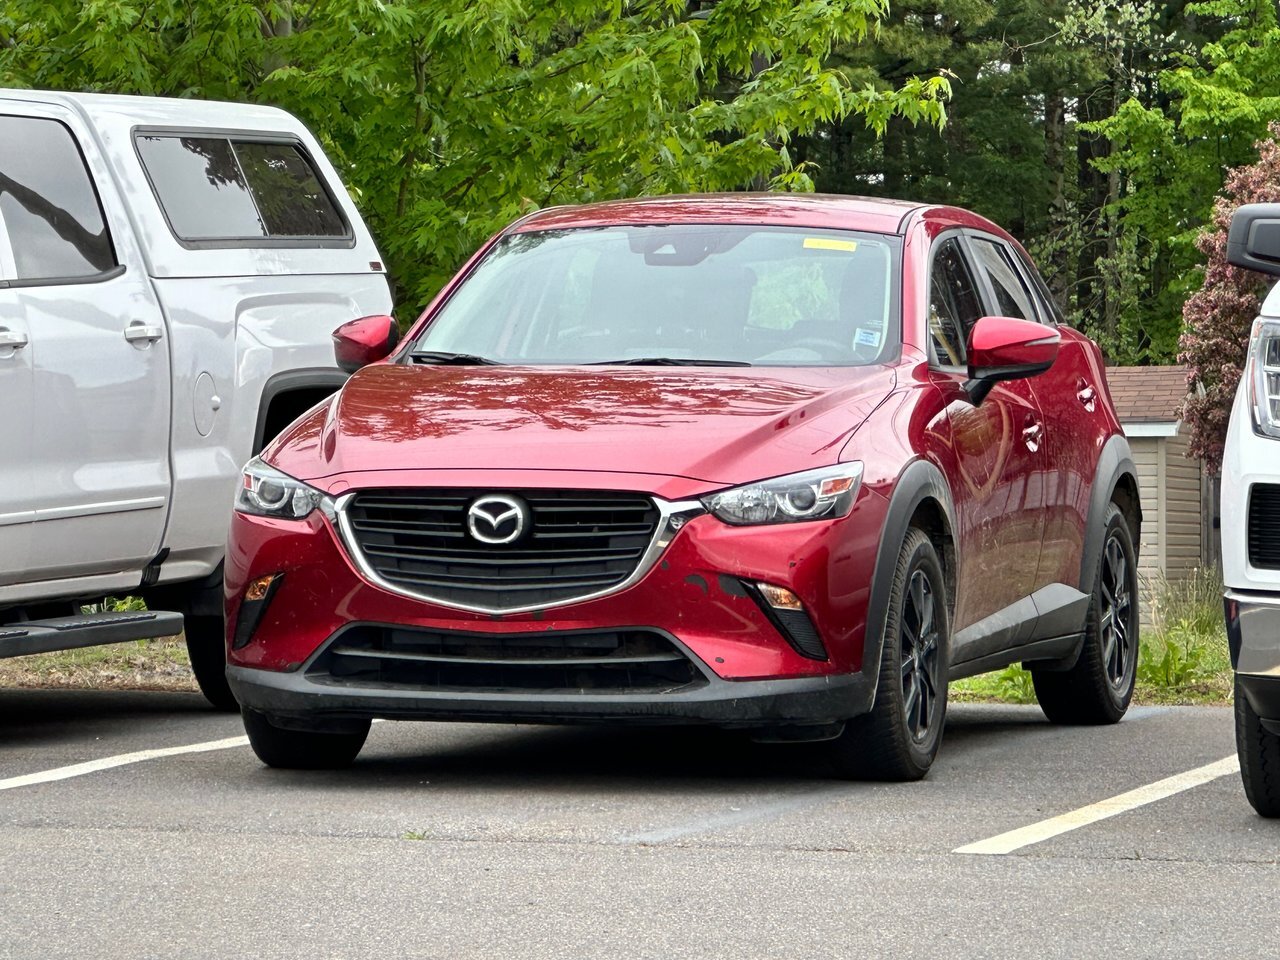 2019 Mazda CX-3 GX